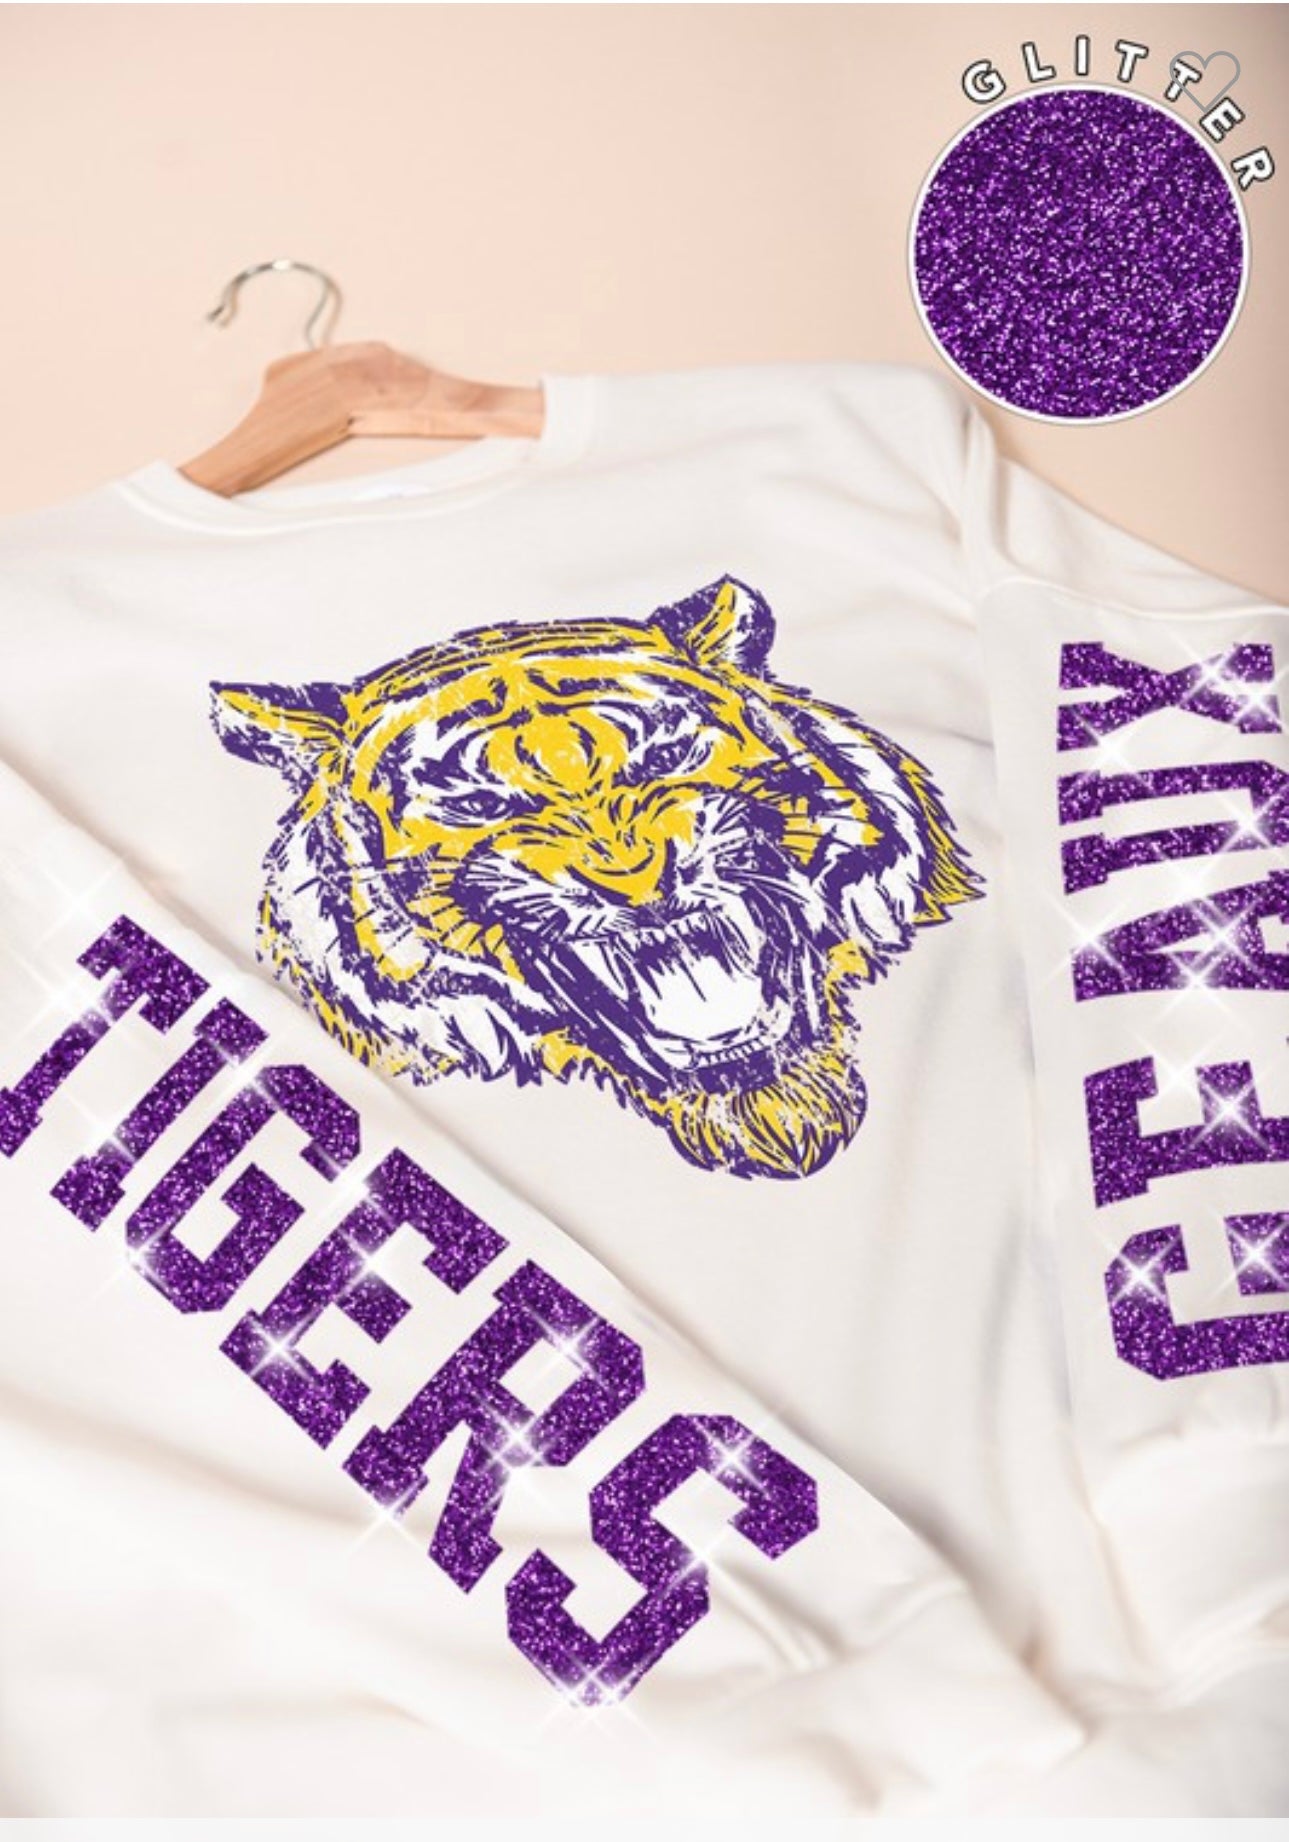 Geaux Tigers Long Sleeve Shirt